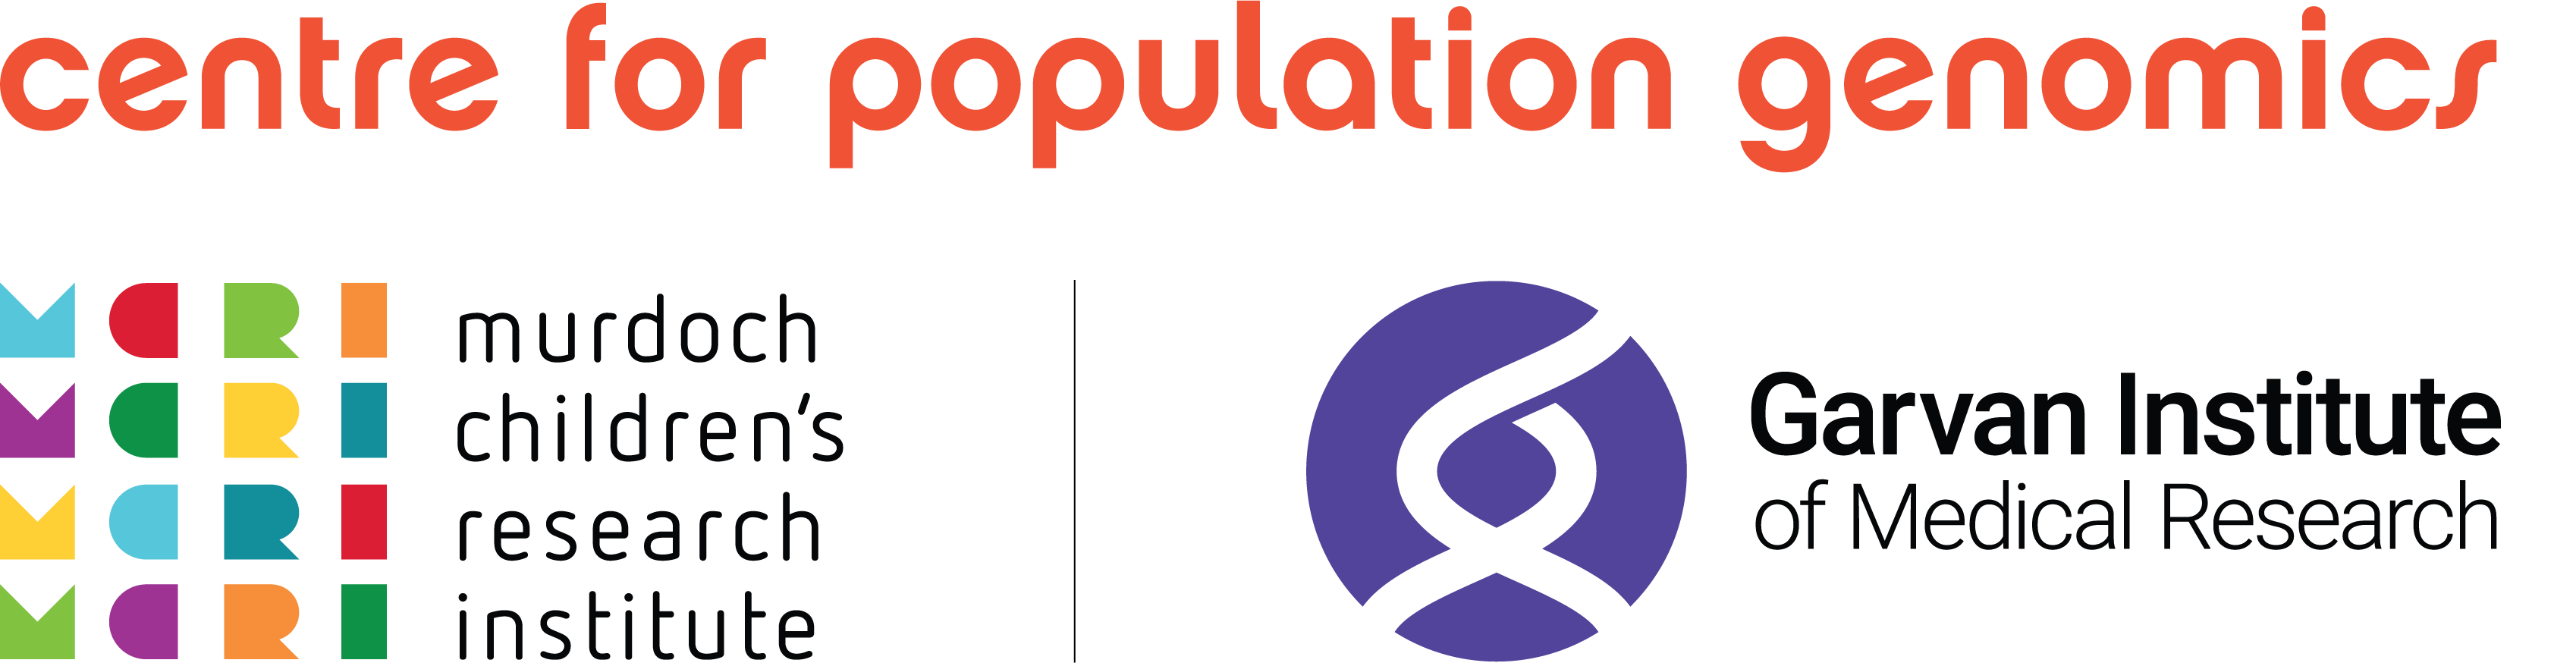 Centre for Population Genomics logo